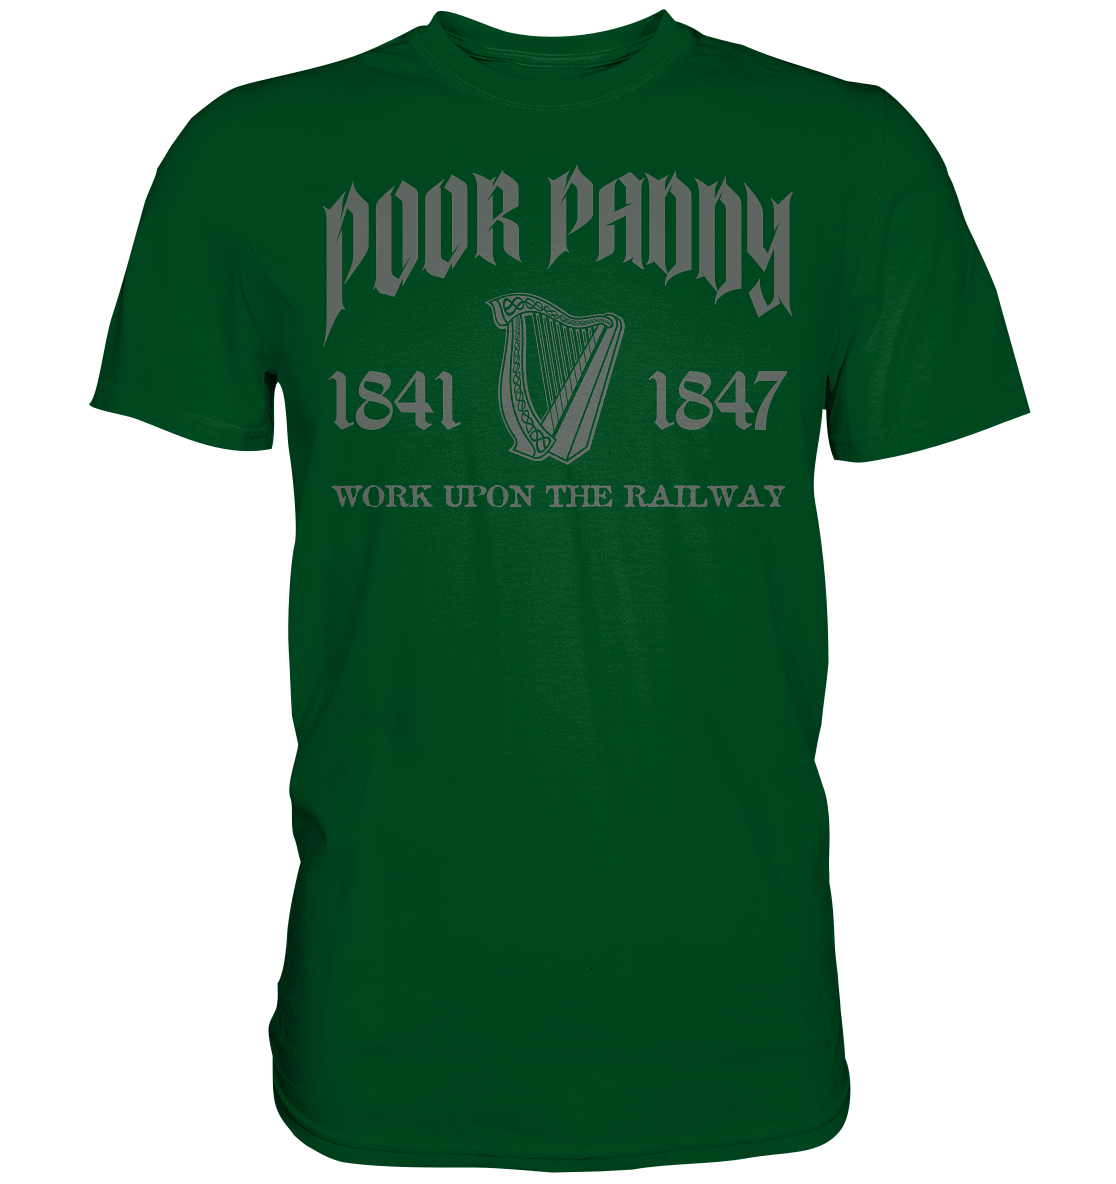 Poor Paddy "Work Upon The Railway" - Premium Shirt